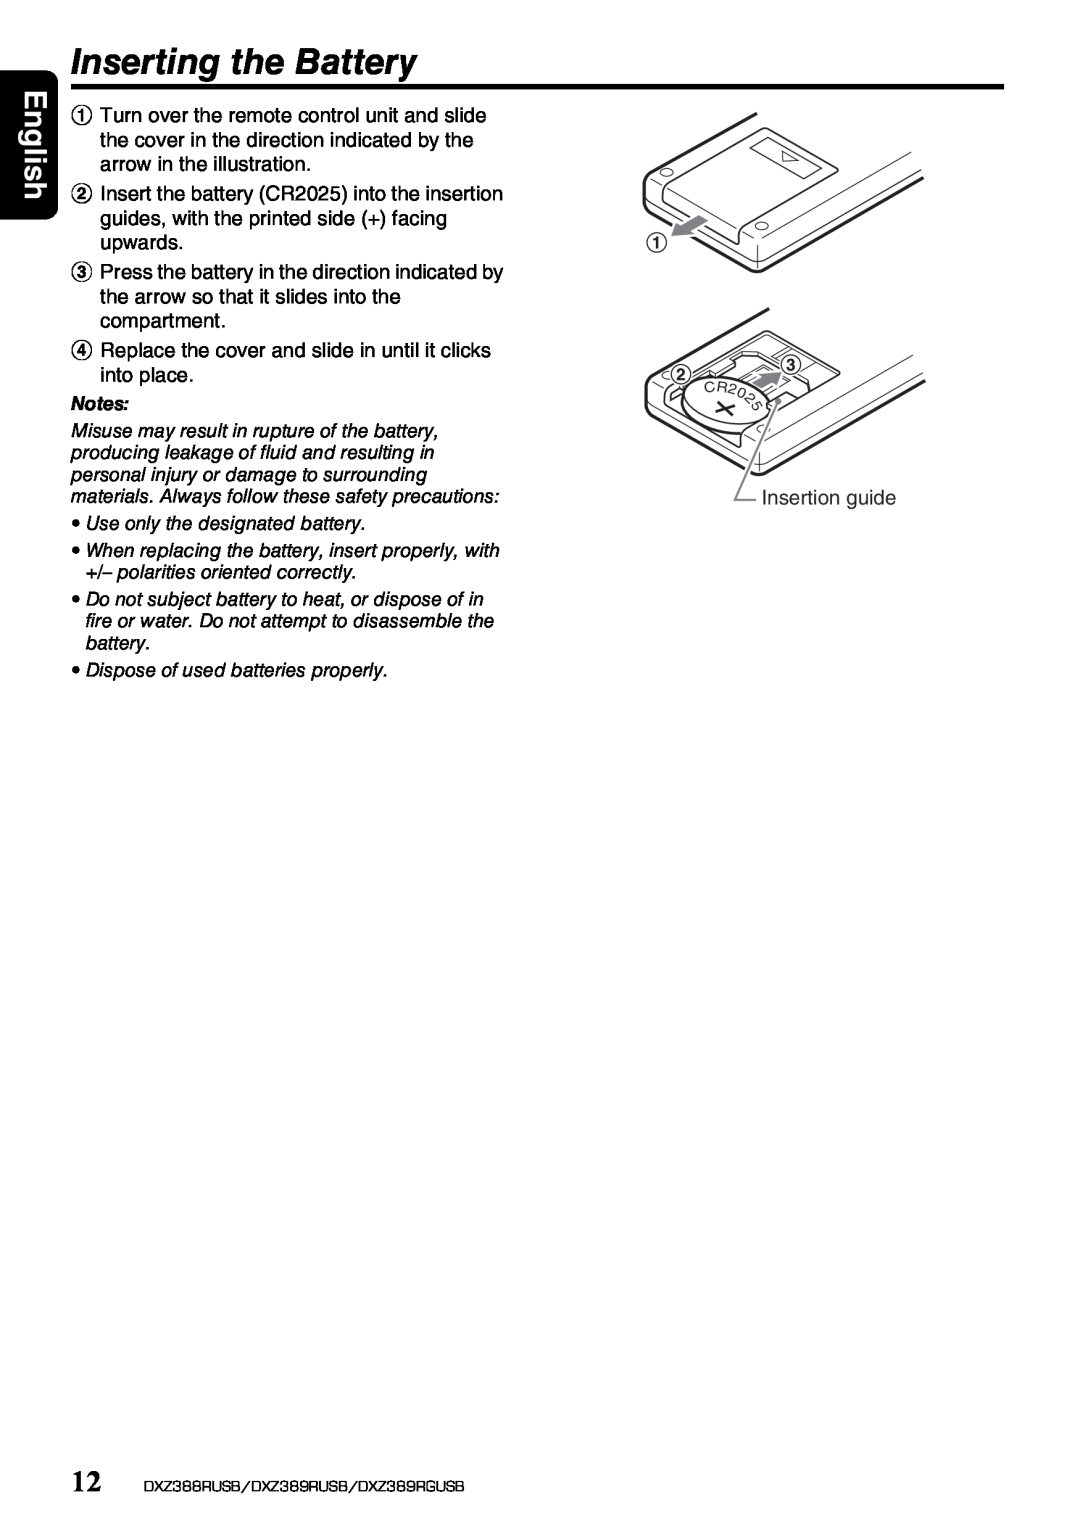 Clarion DXZ389RGUSB, DXZ389RUSB, DXZ388RUSB owner manual Inserting the Battery, English 